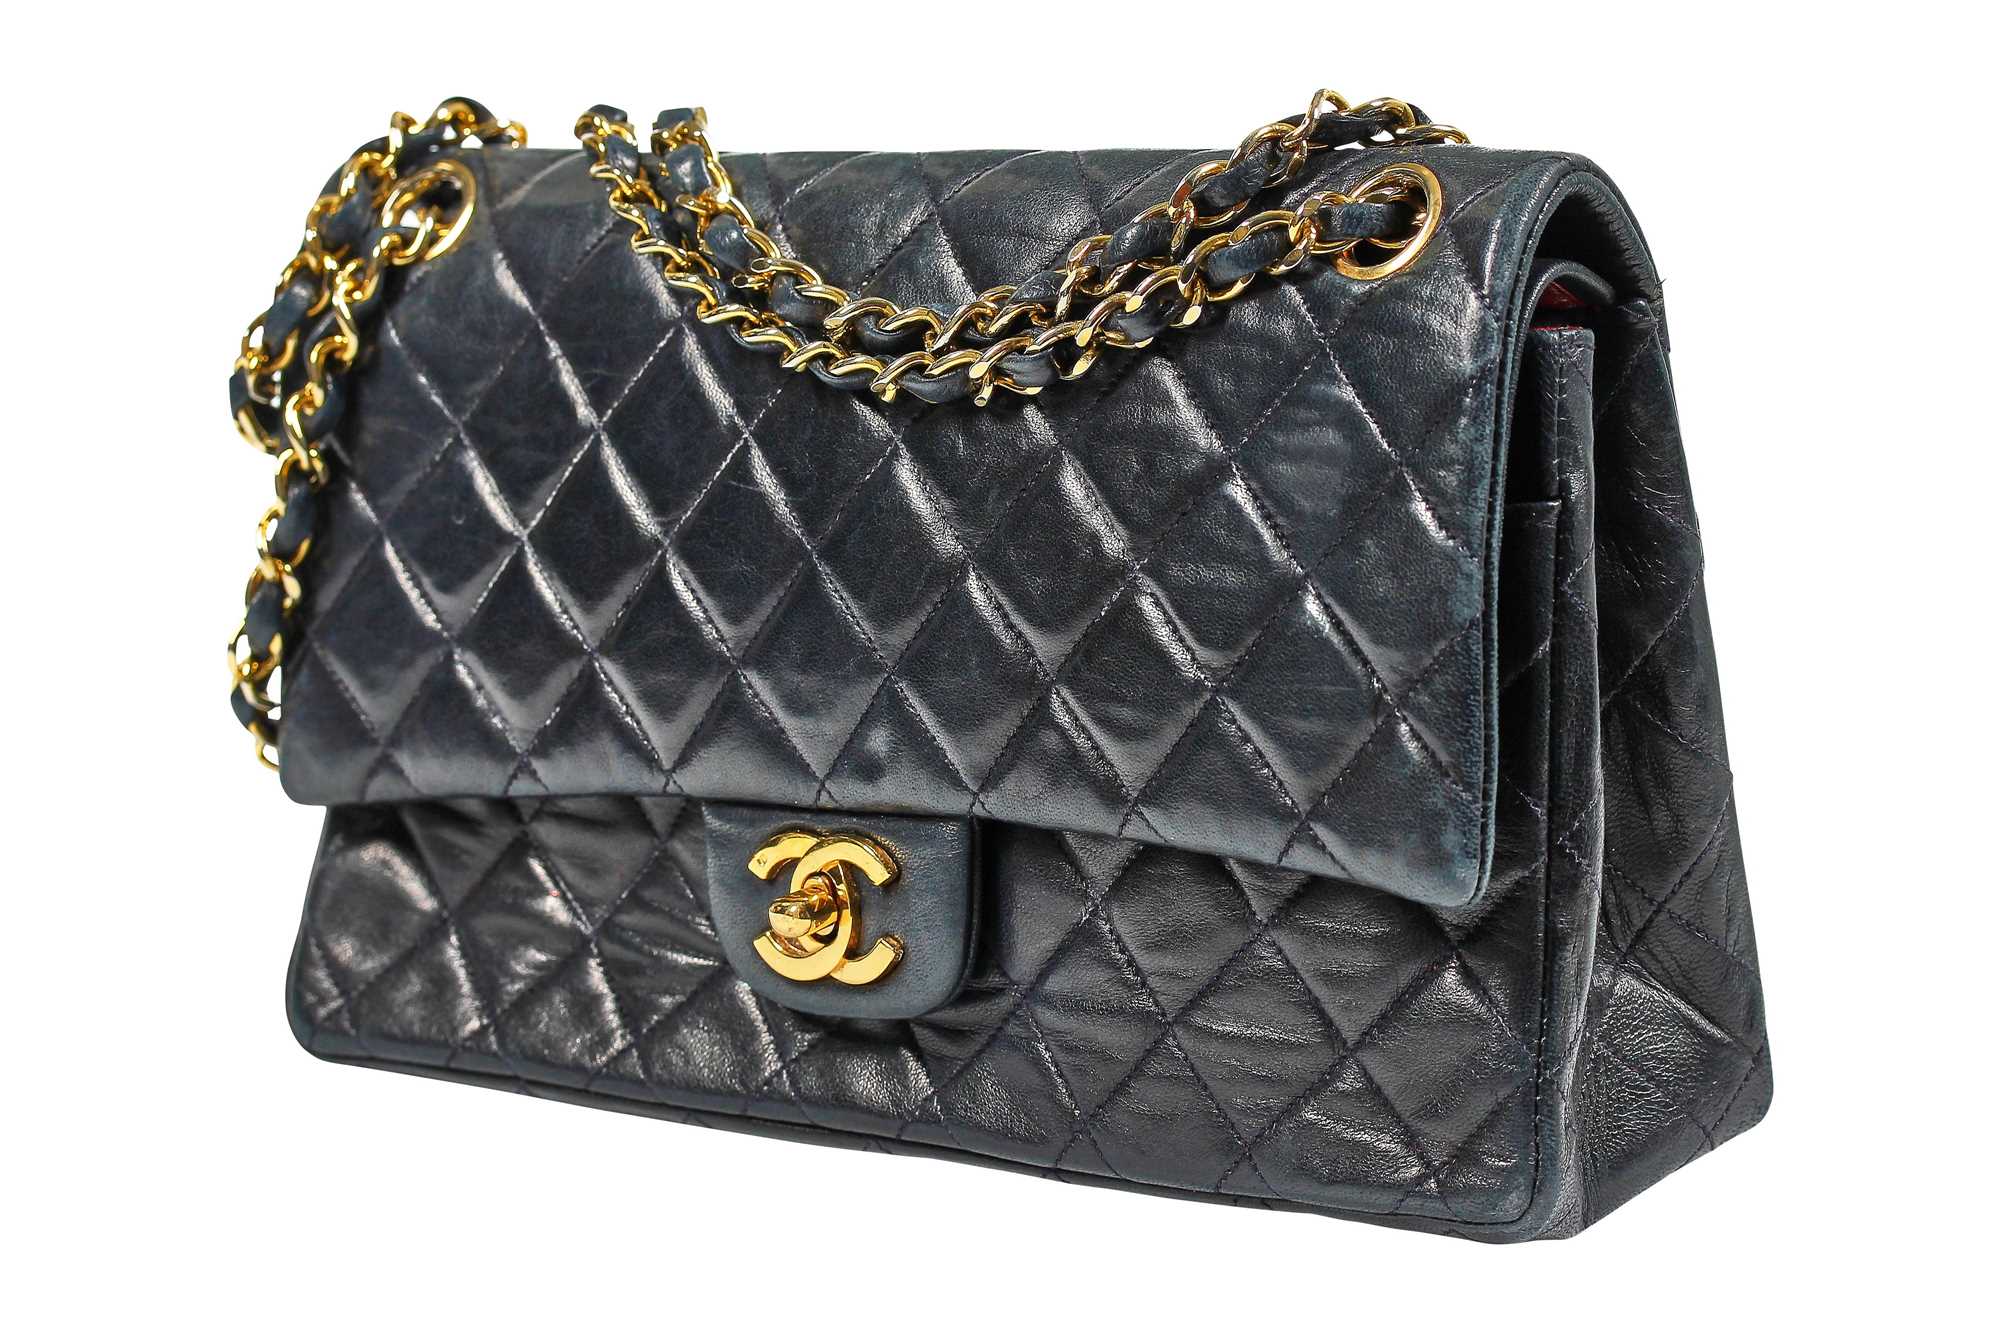 Chanel Black Leather 2.55 Bag 23 cm, 1980s